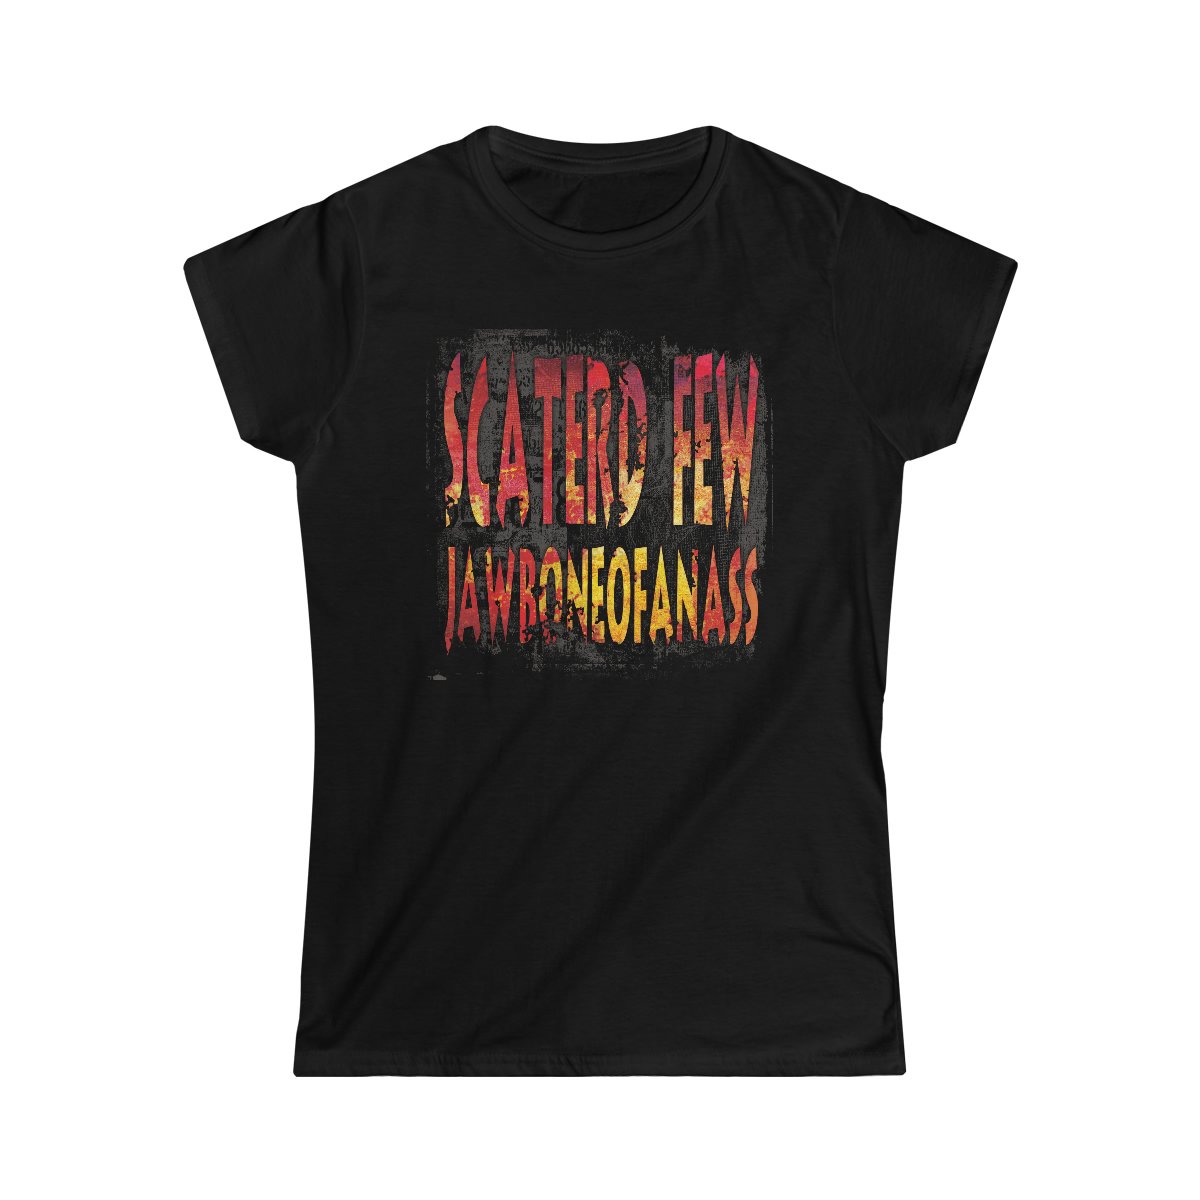 Scaterd Few – JawboneOfAnAss Women’s Short Sleeve Tshirt 64000L